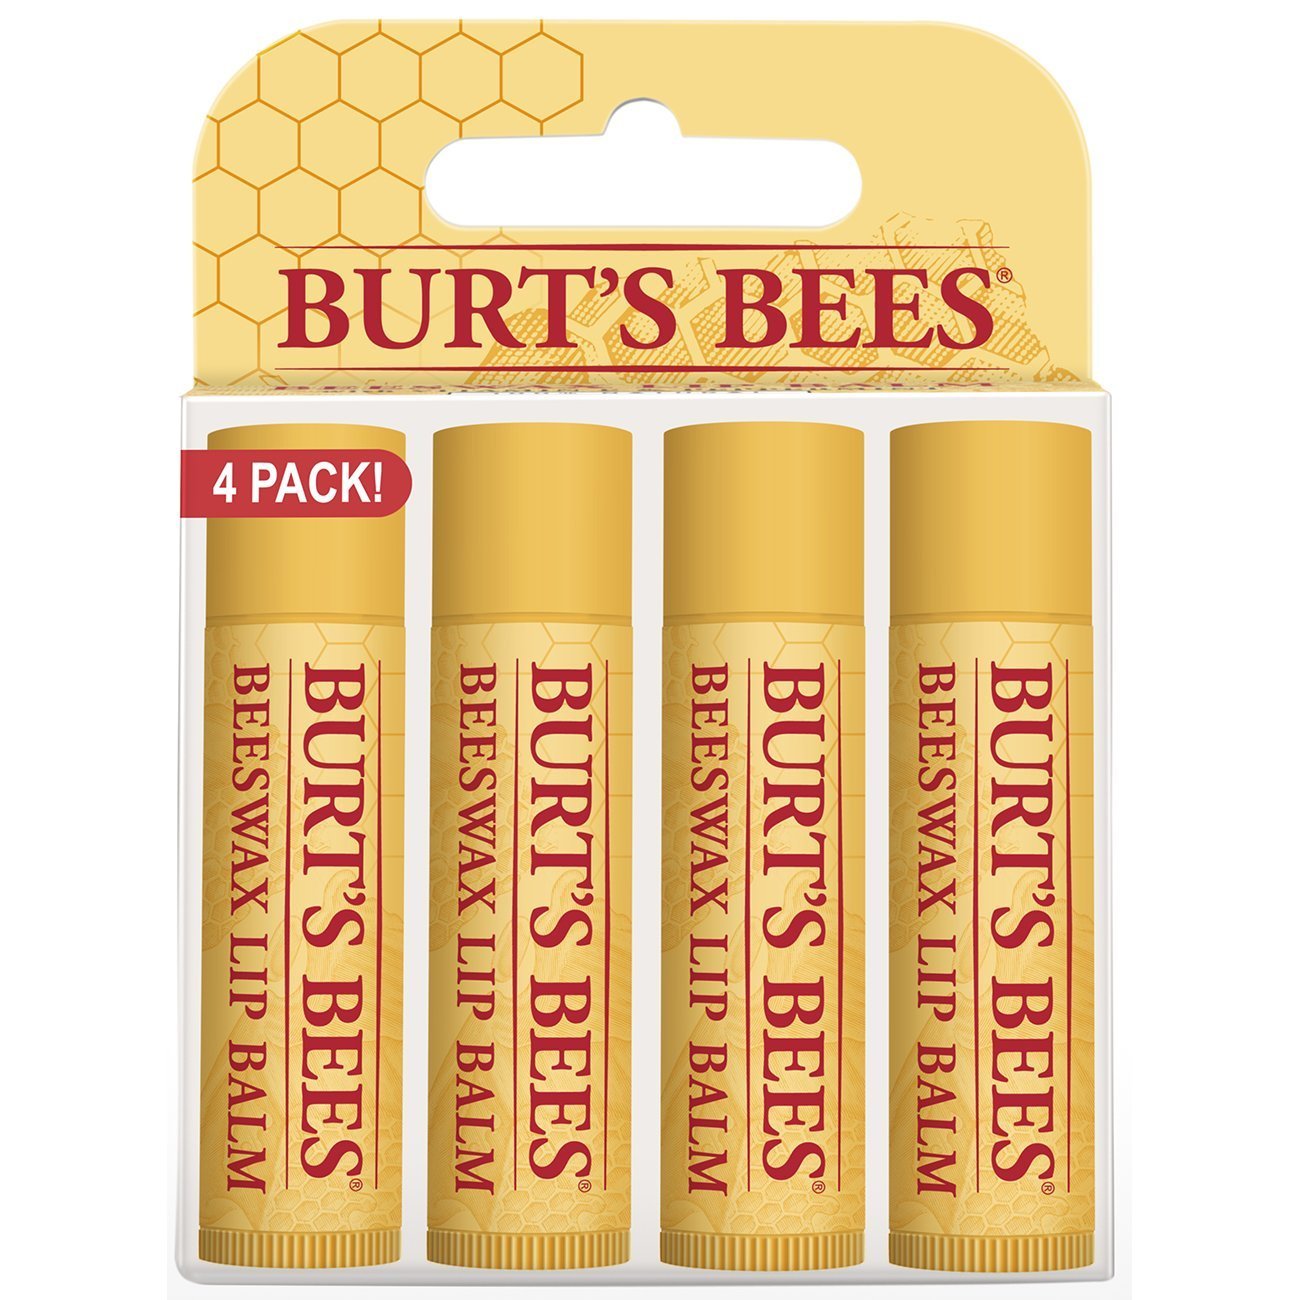 Great Price On 4 Tubes Burt's Bees Lip Balm